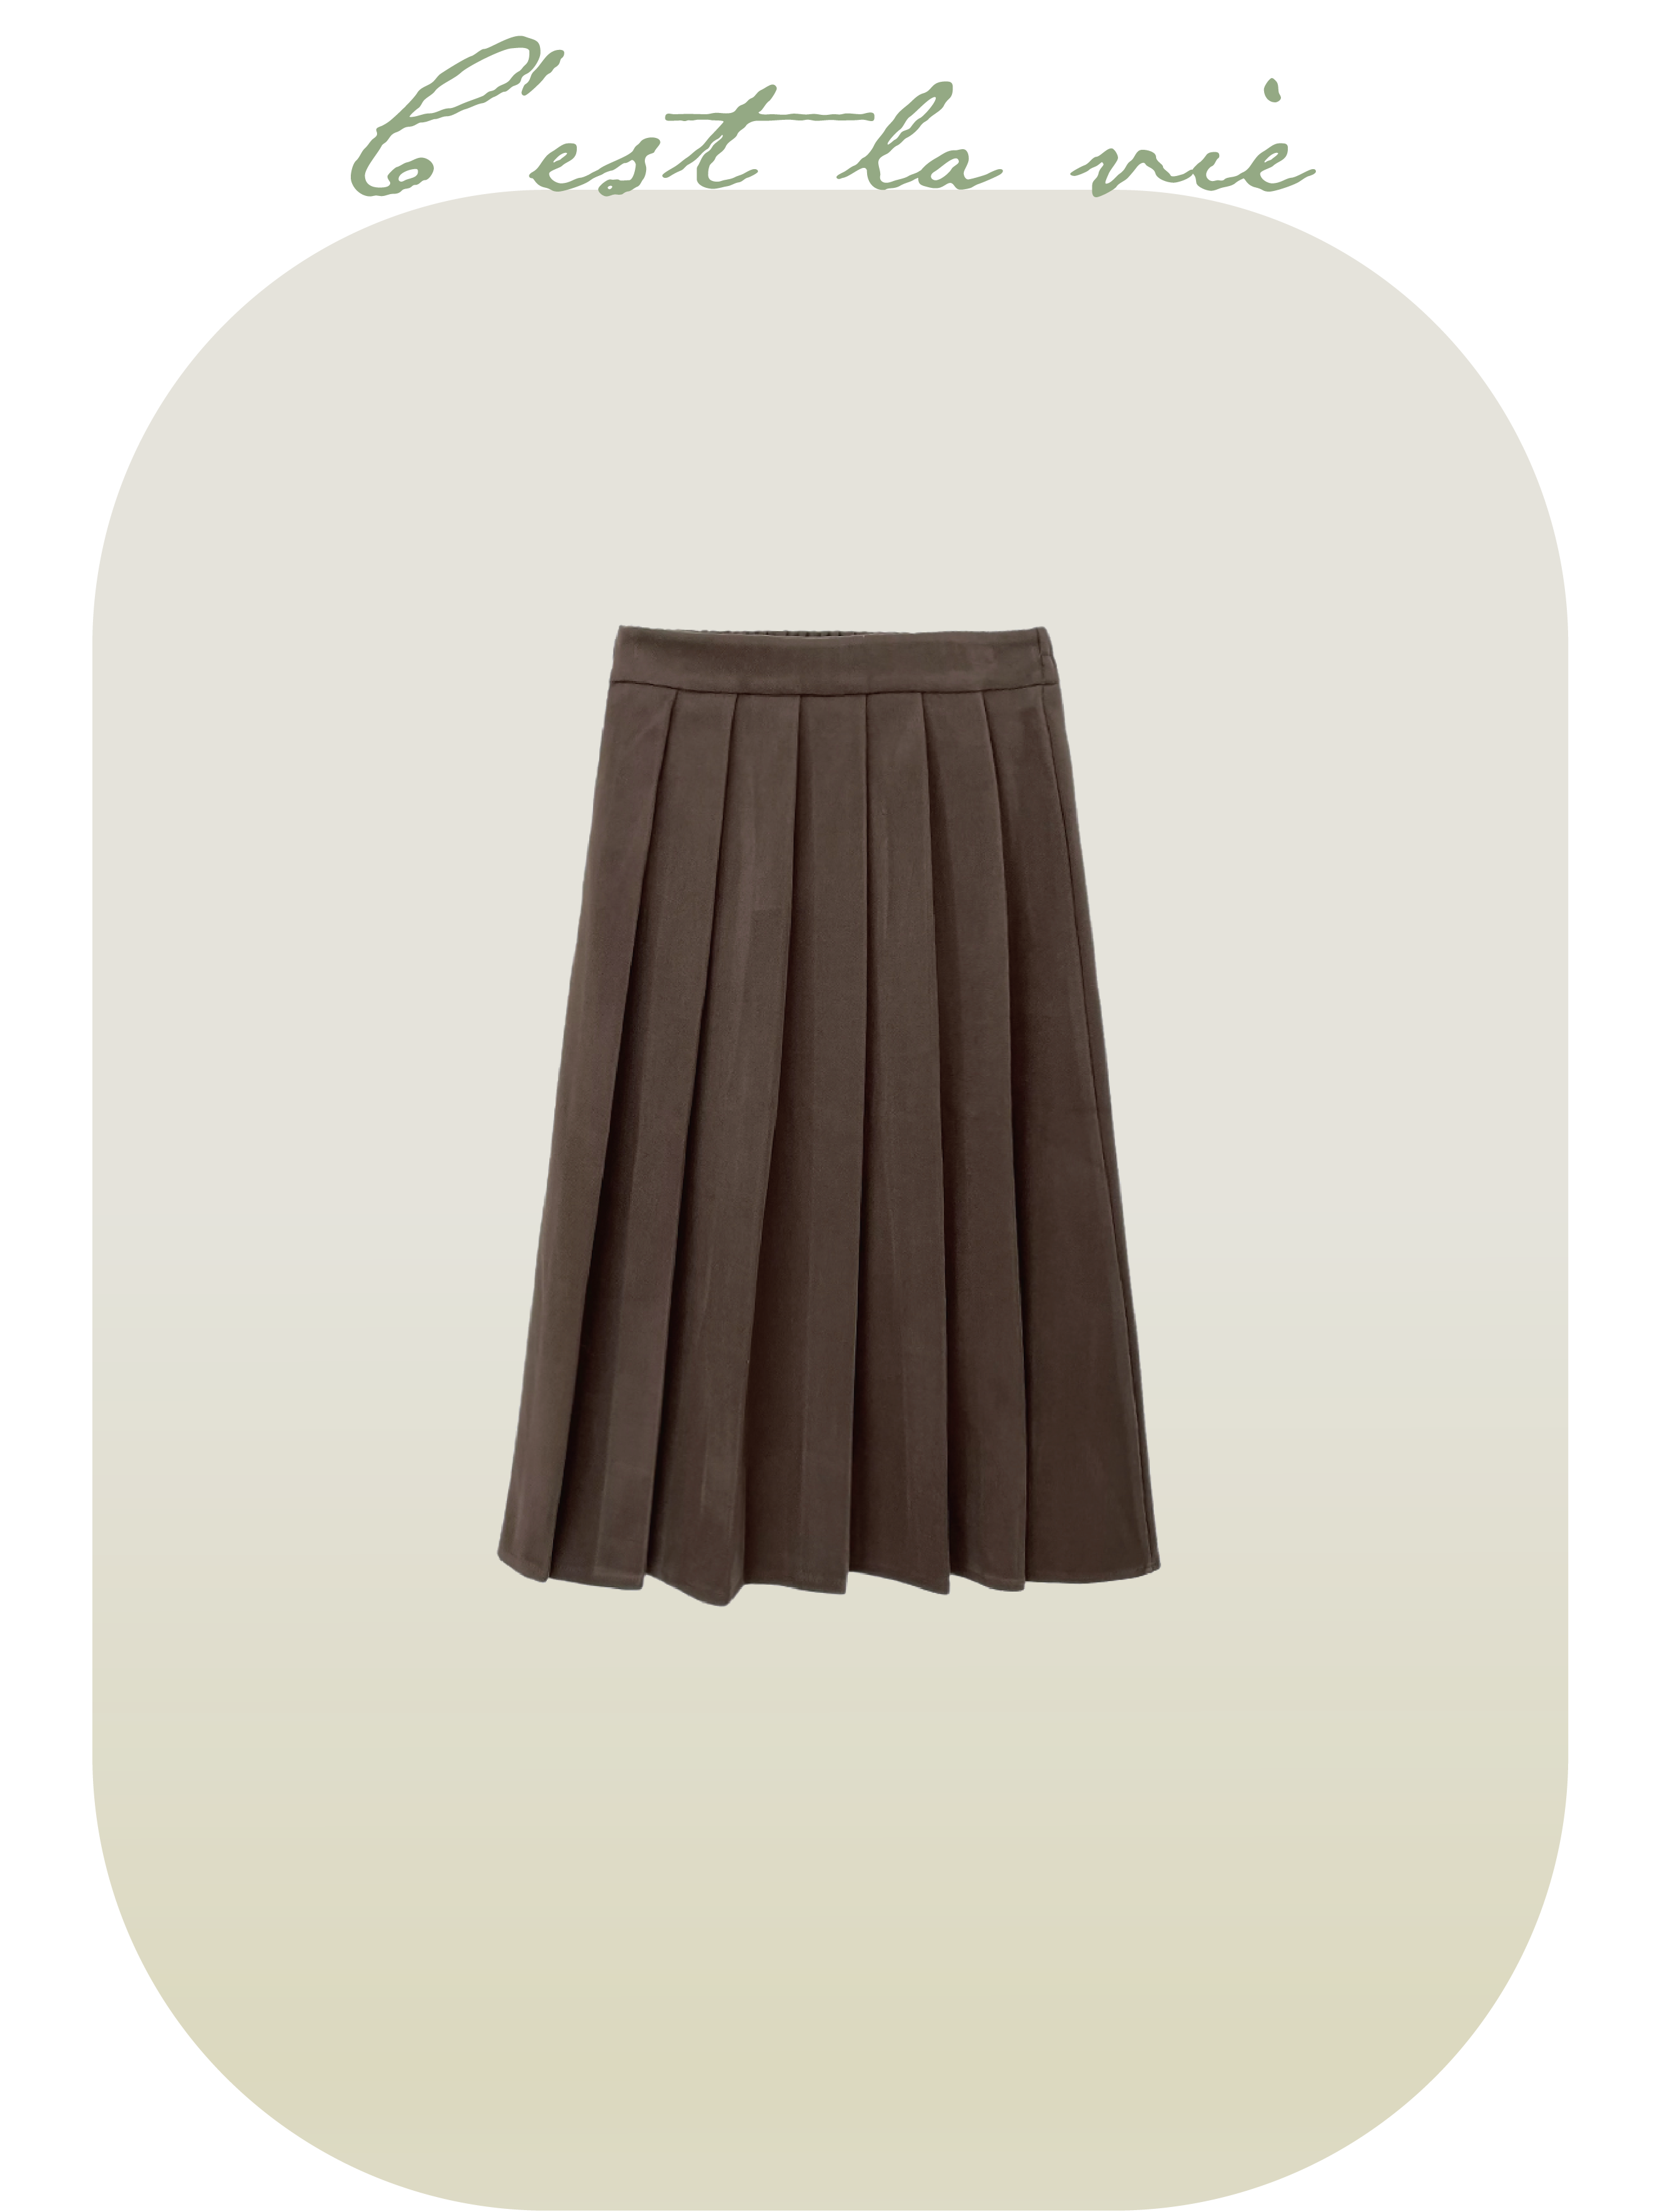 Wool Pleats Skirt